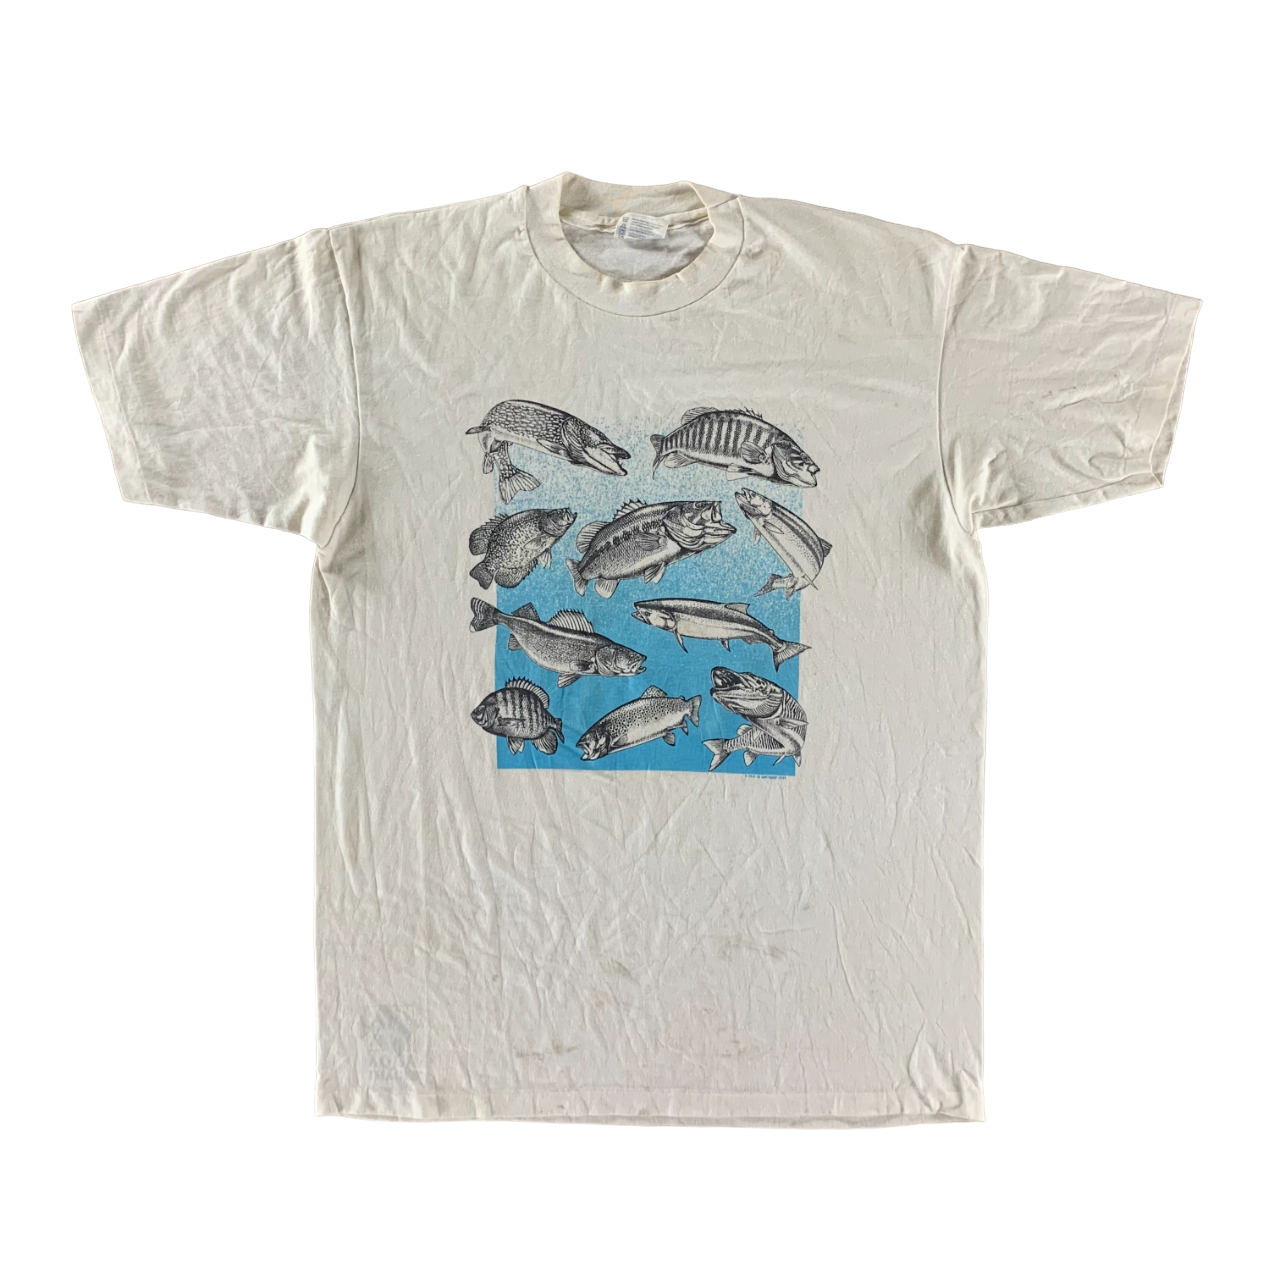 Vintage 1991 Fish T-shirt size Large